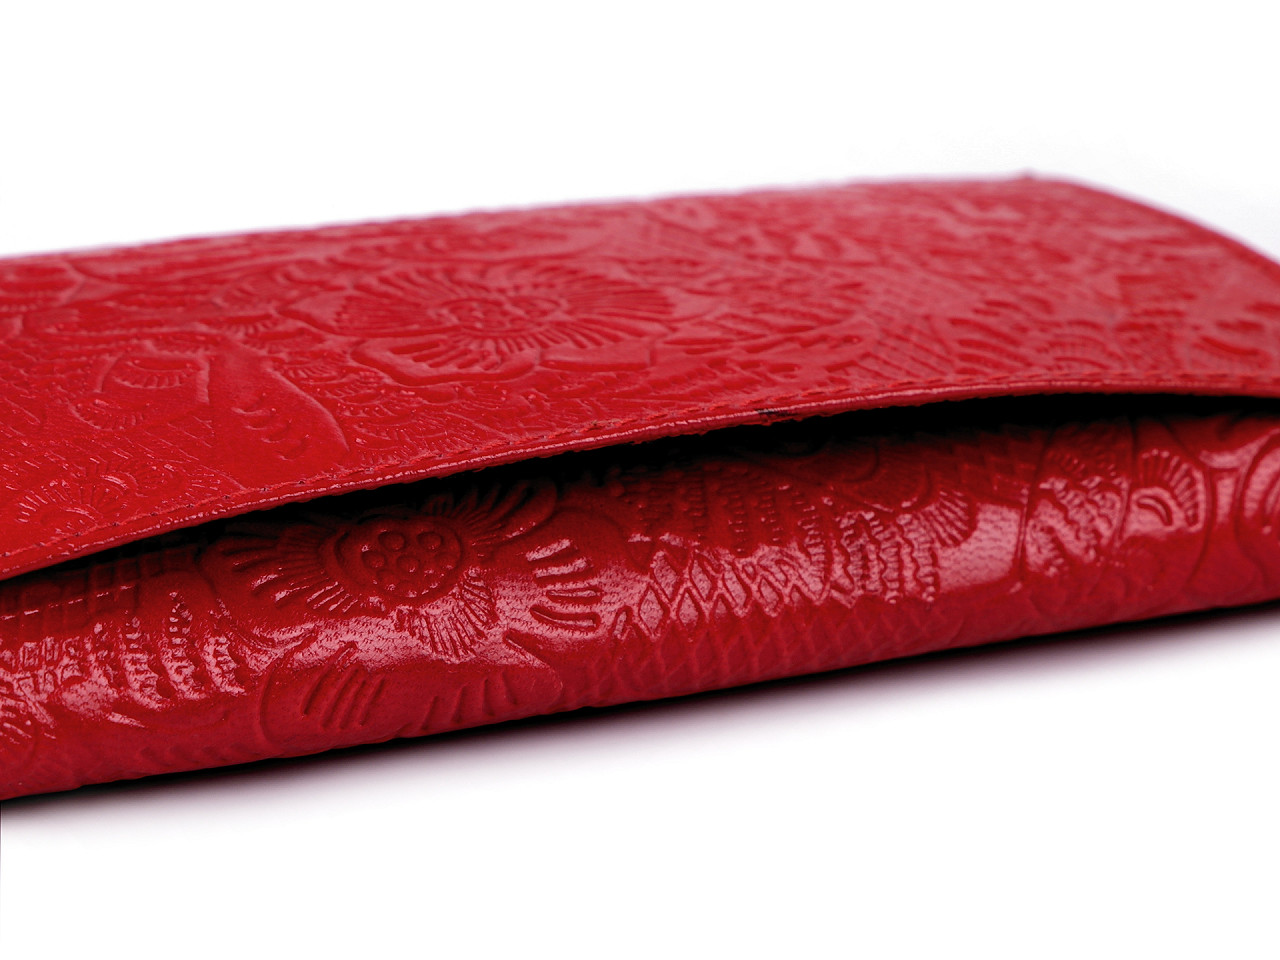 Damen-Geldbörse aus Leder 9x17,5 cm, rot, 1 Stück